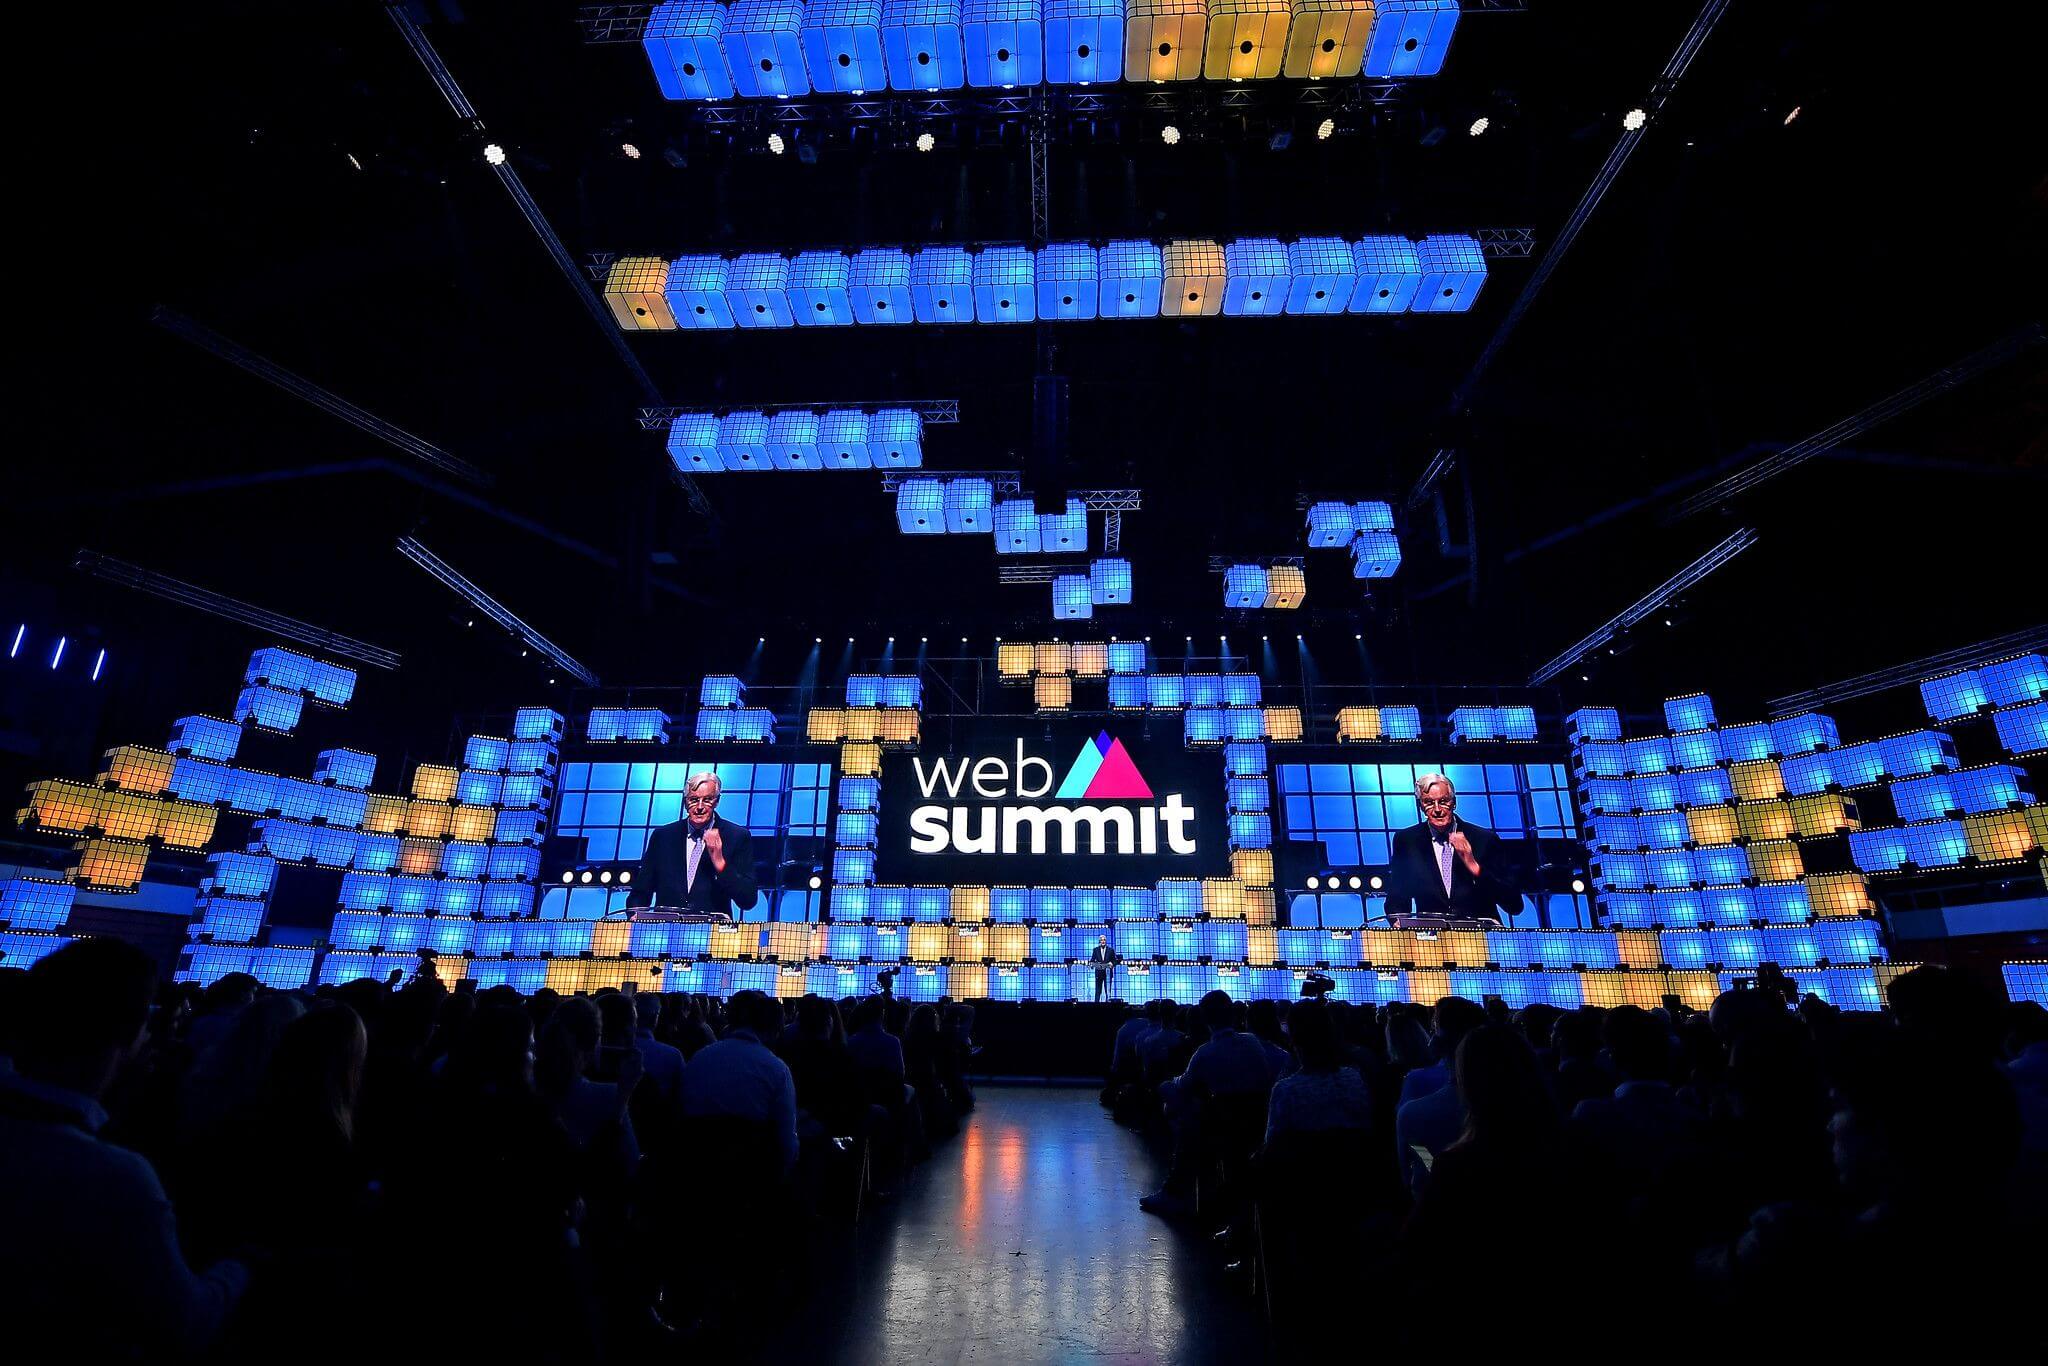 Web Summit stage